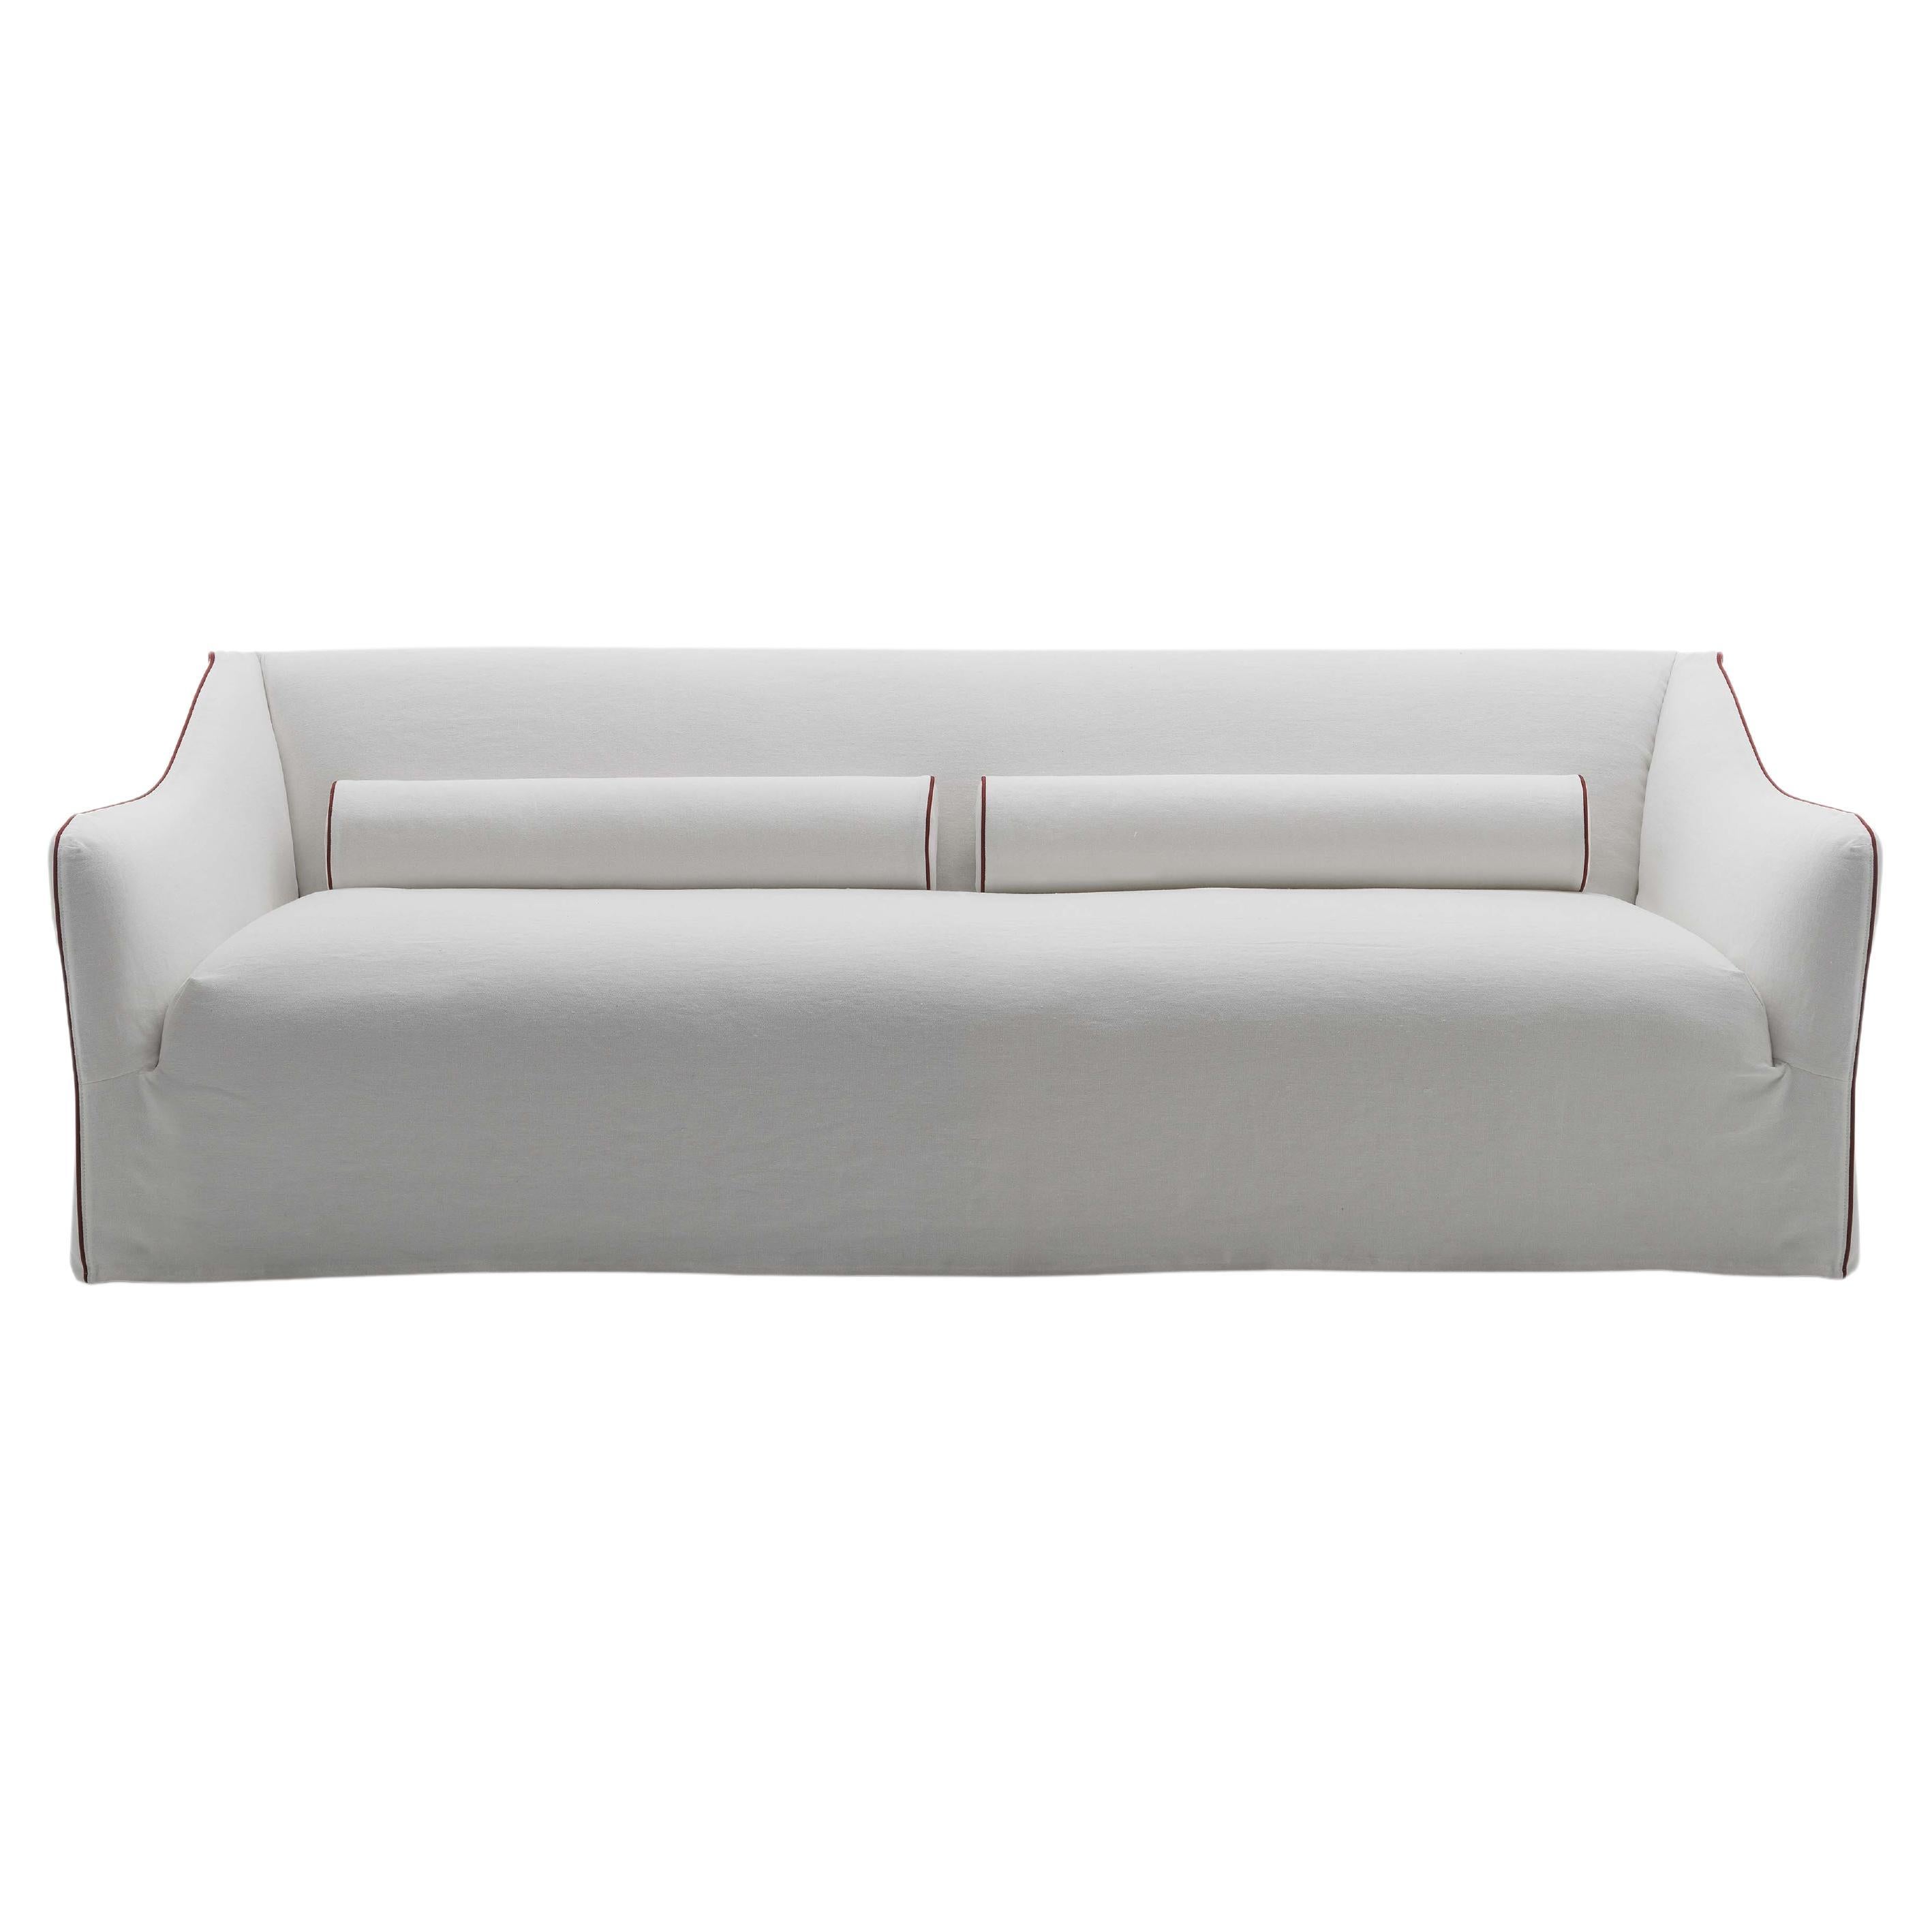 Gervasoni Sofa Upholstered Saia 12 by David Lopez Quincoces